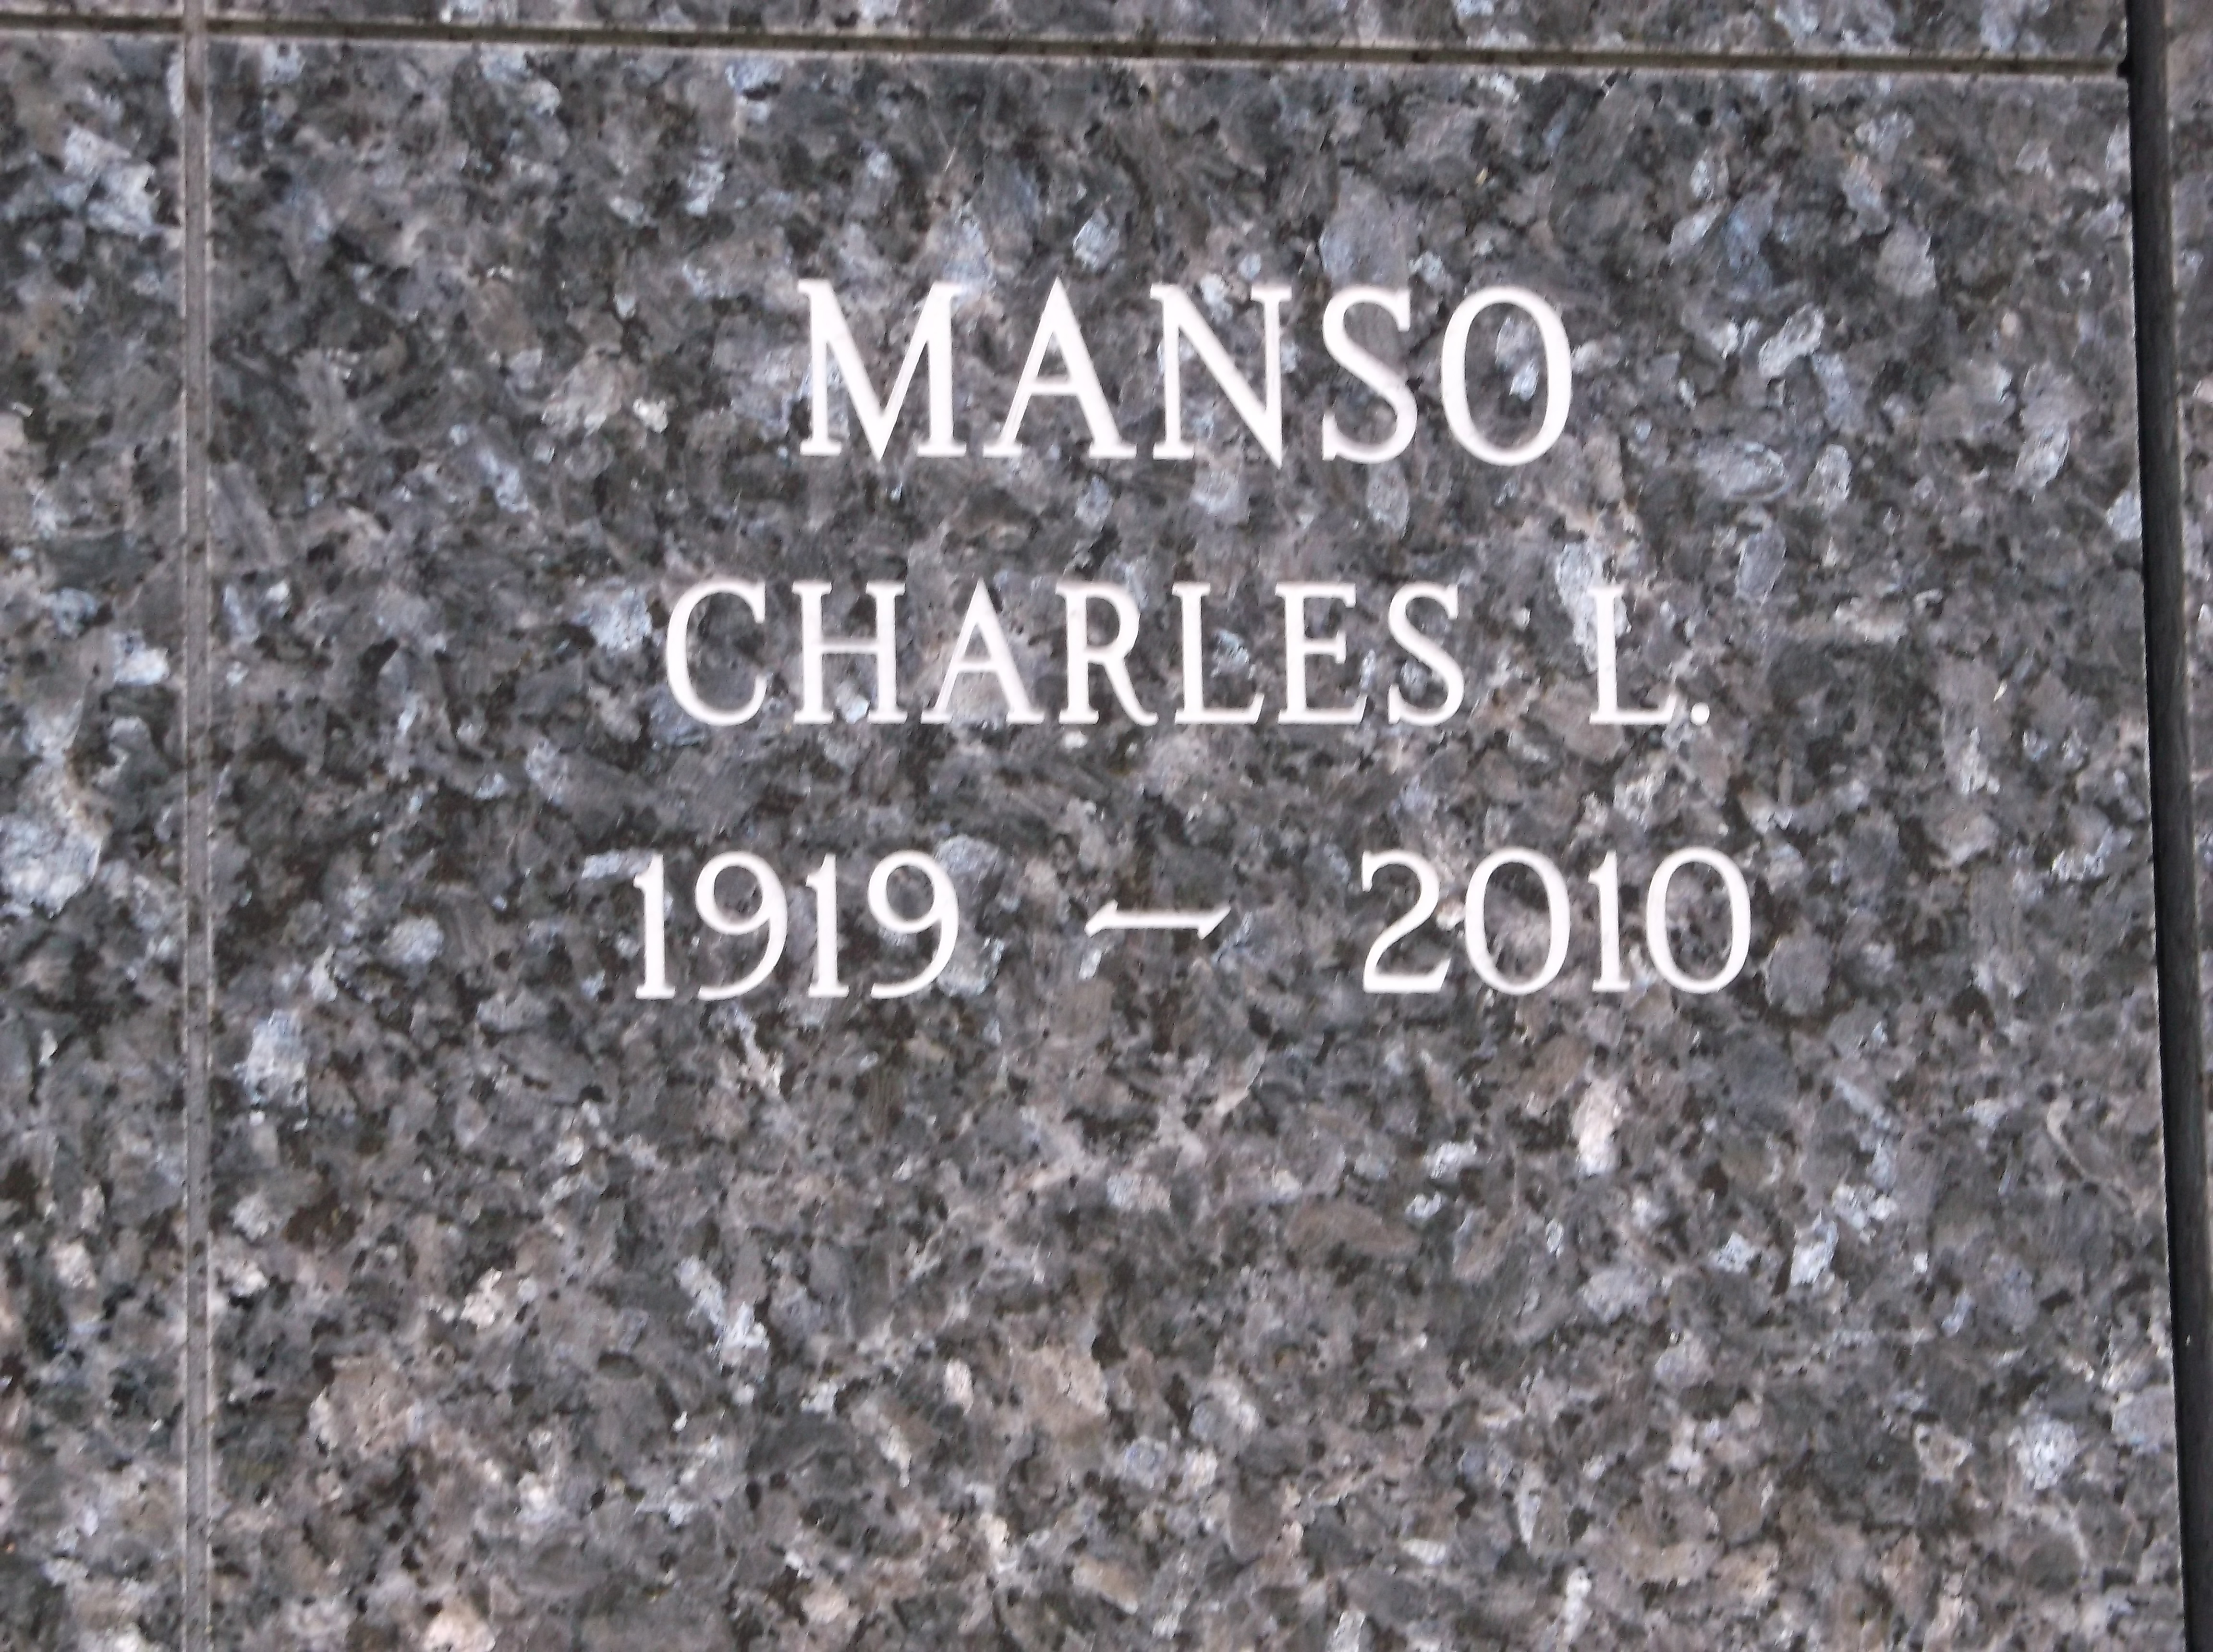 Charles L Manso